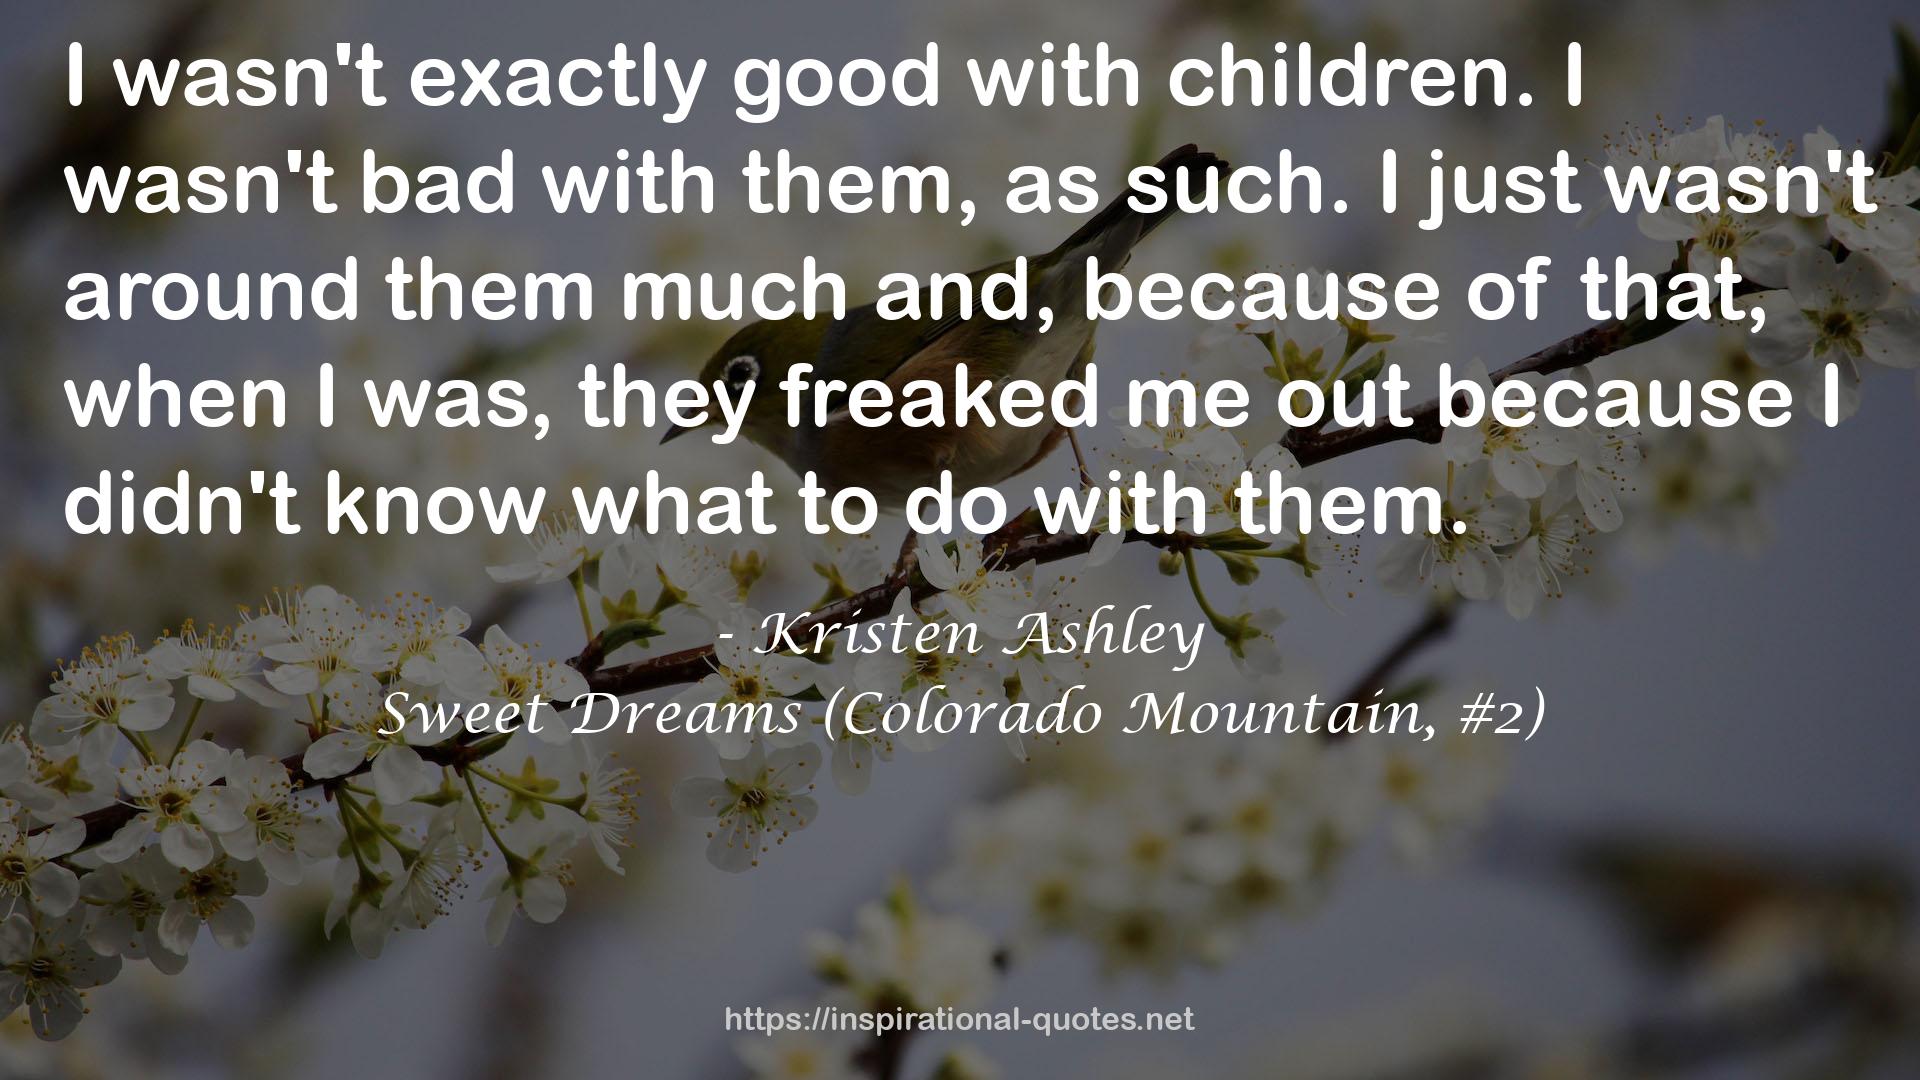 Sweet Dreams (Colorado Mountain, #2) QUOTES